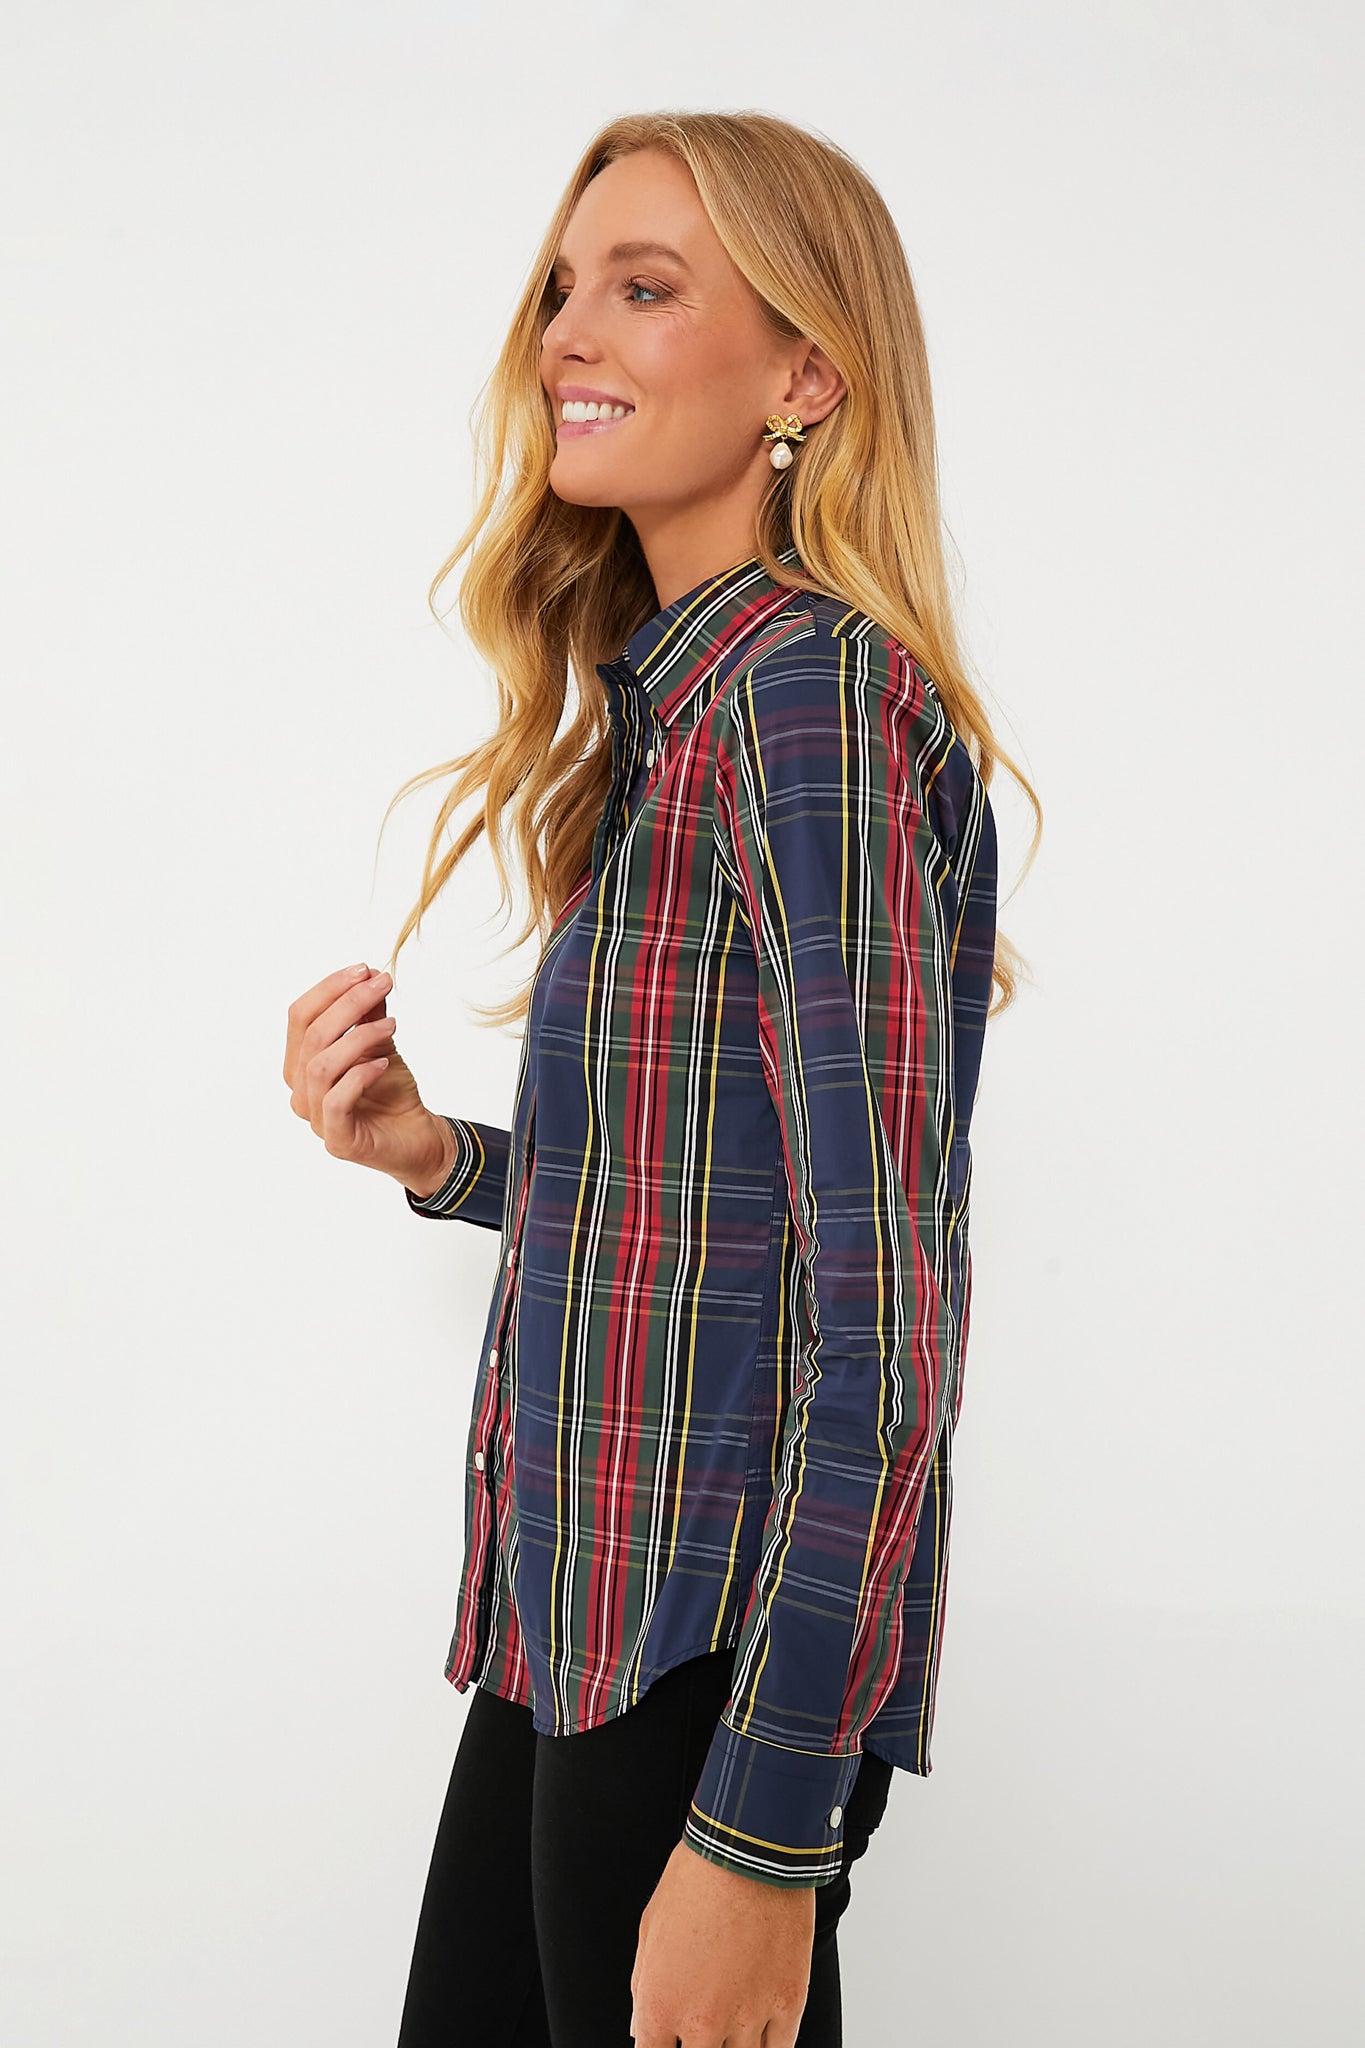 The Shirt by Rochelle Behrens Drop Waist Plaid Flannel Shirt Dress Size  Small